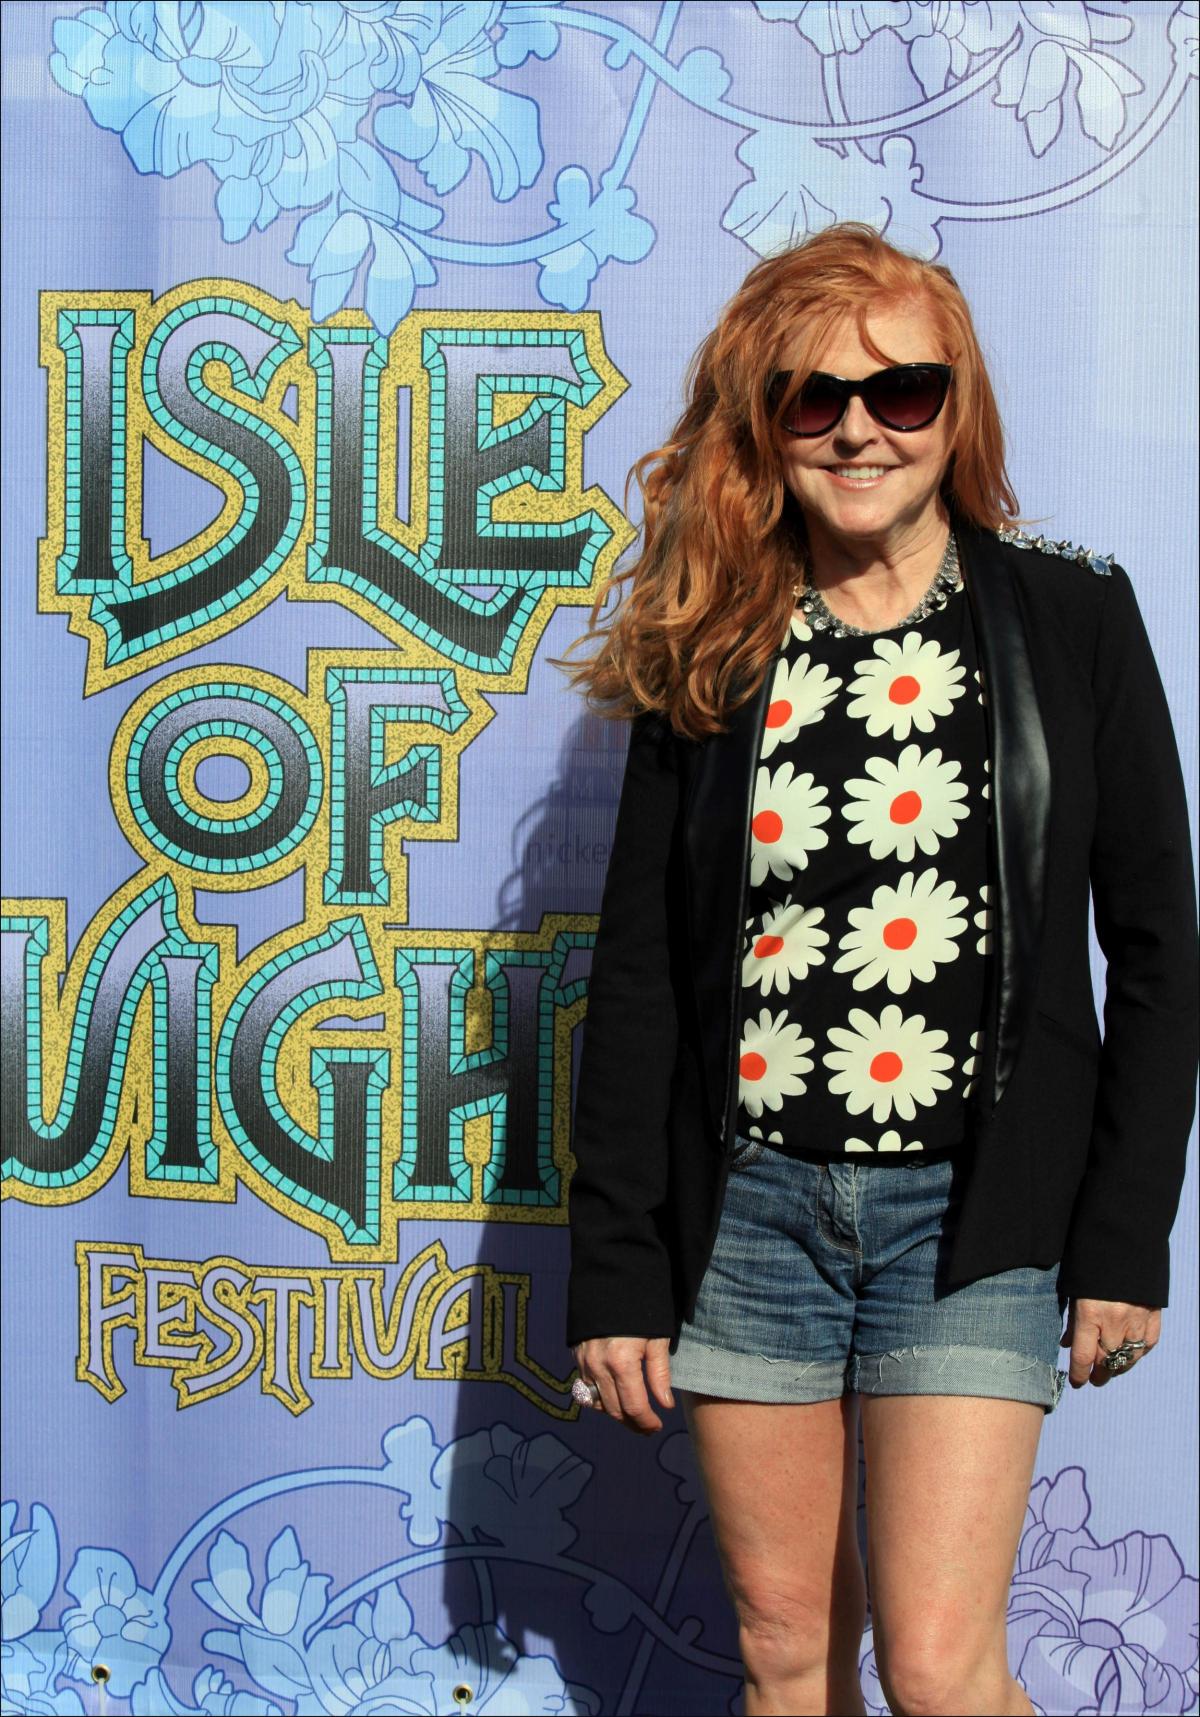 Isle of Wight Festival 2013